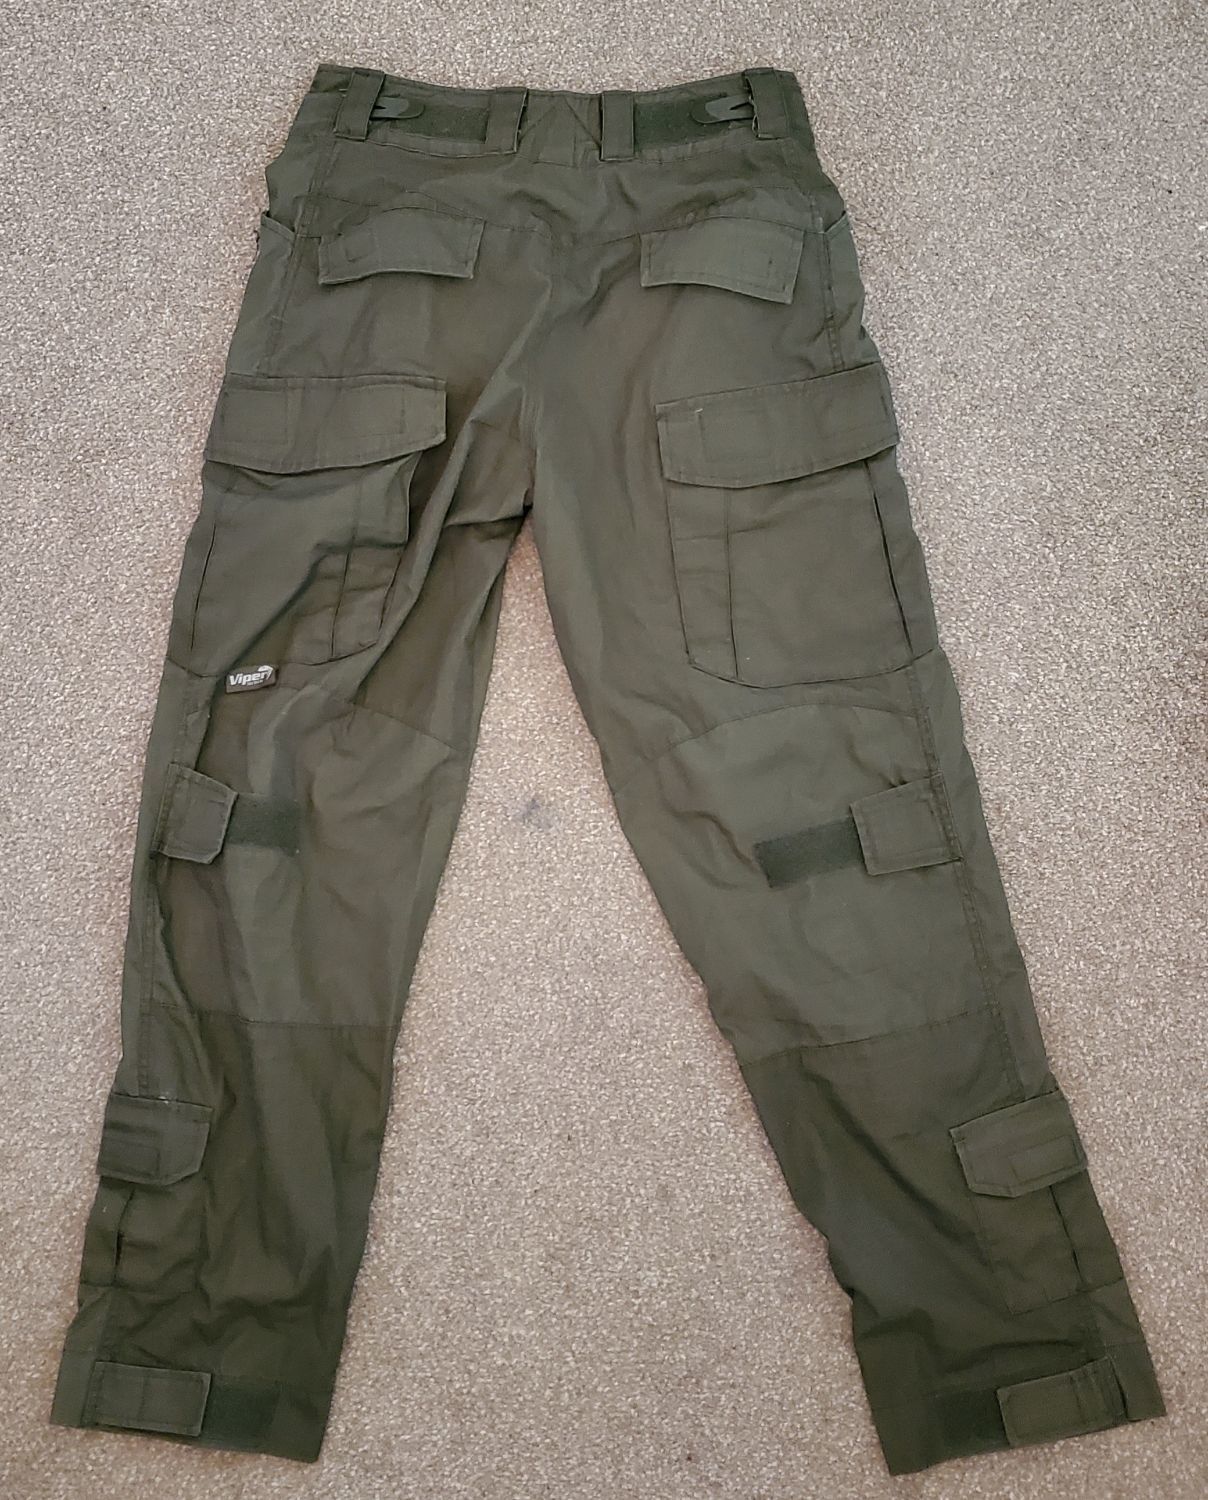 Viper Gen 1 OD Green Combat Trousers - Men's Small 30